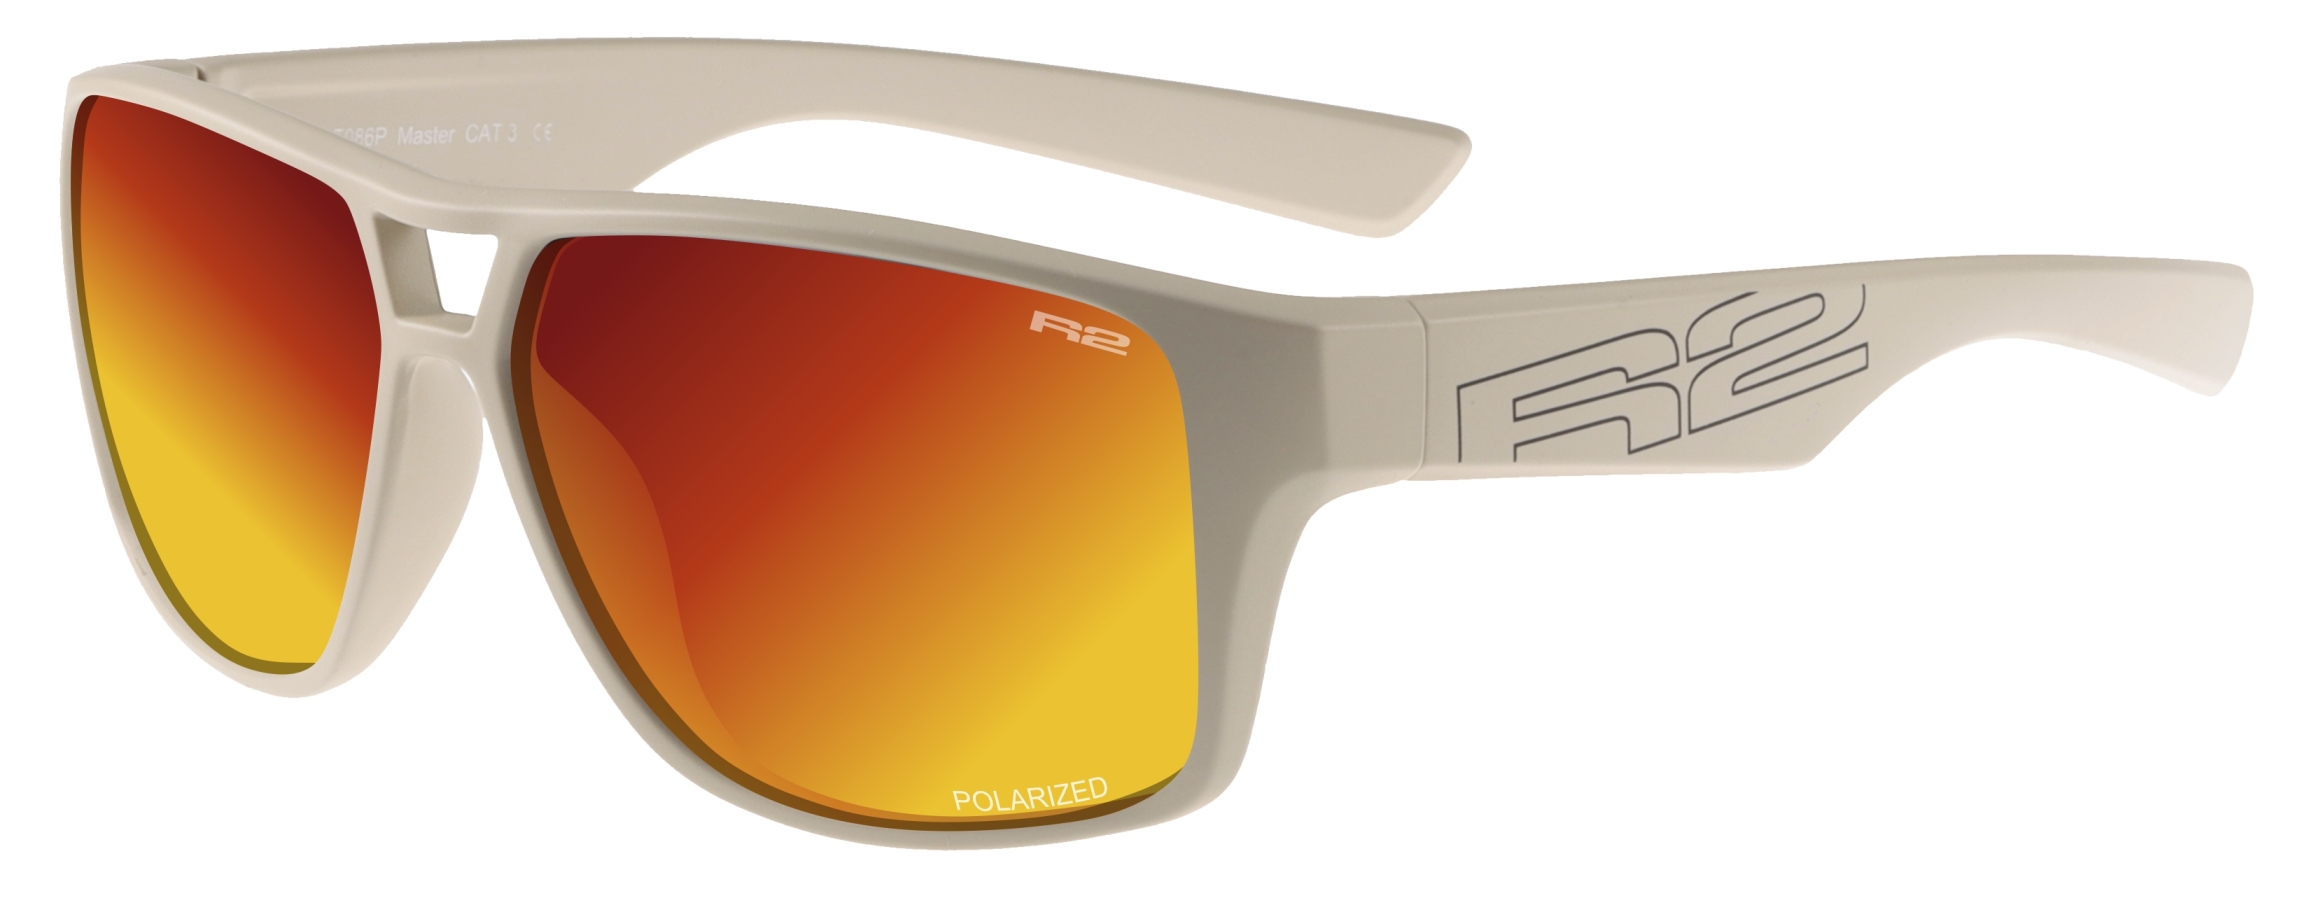 Sport sunglasses R2 MASTER AT086P